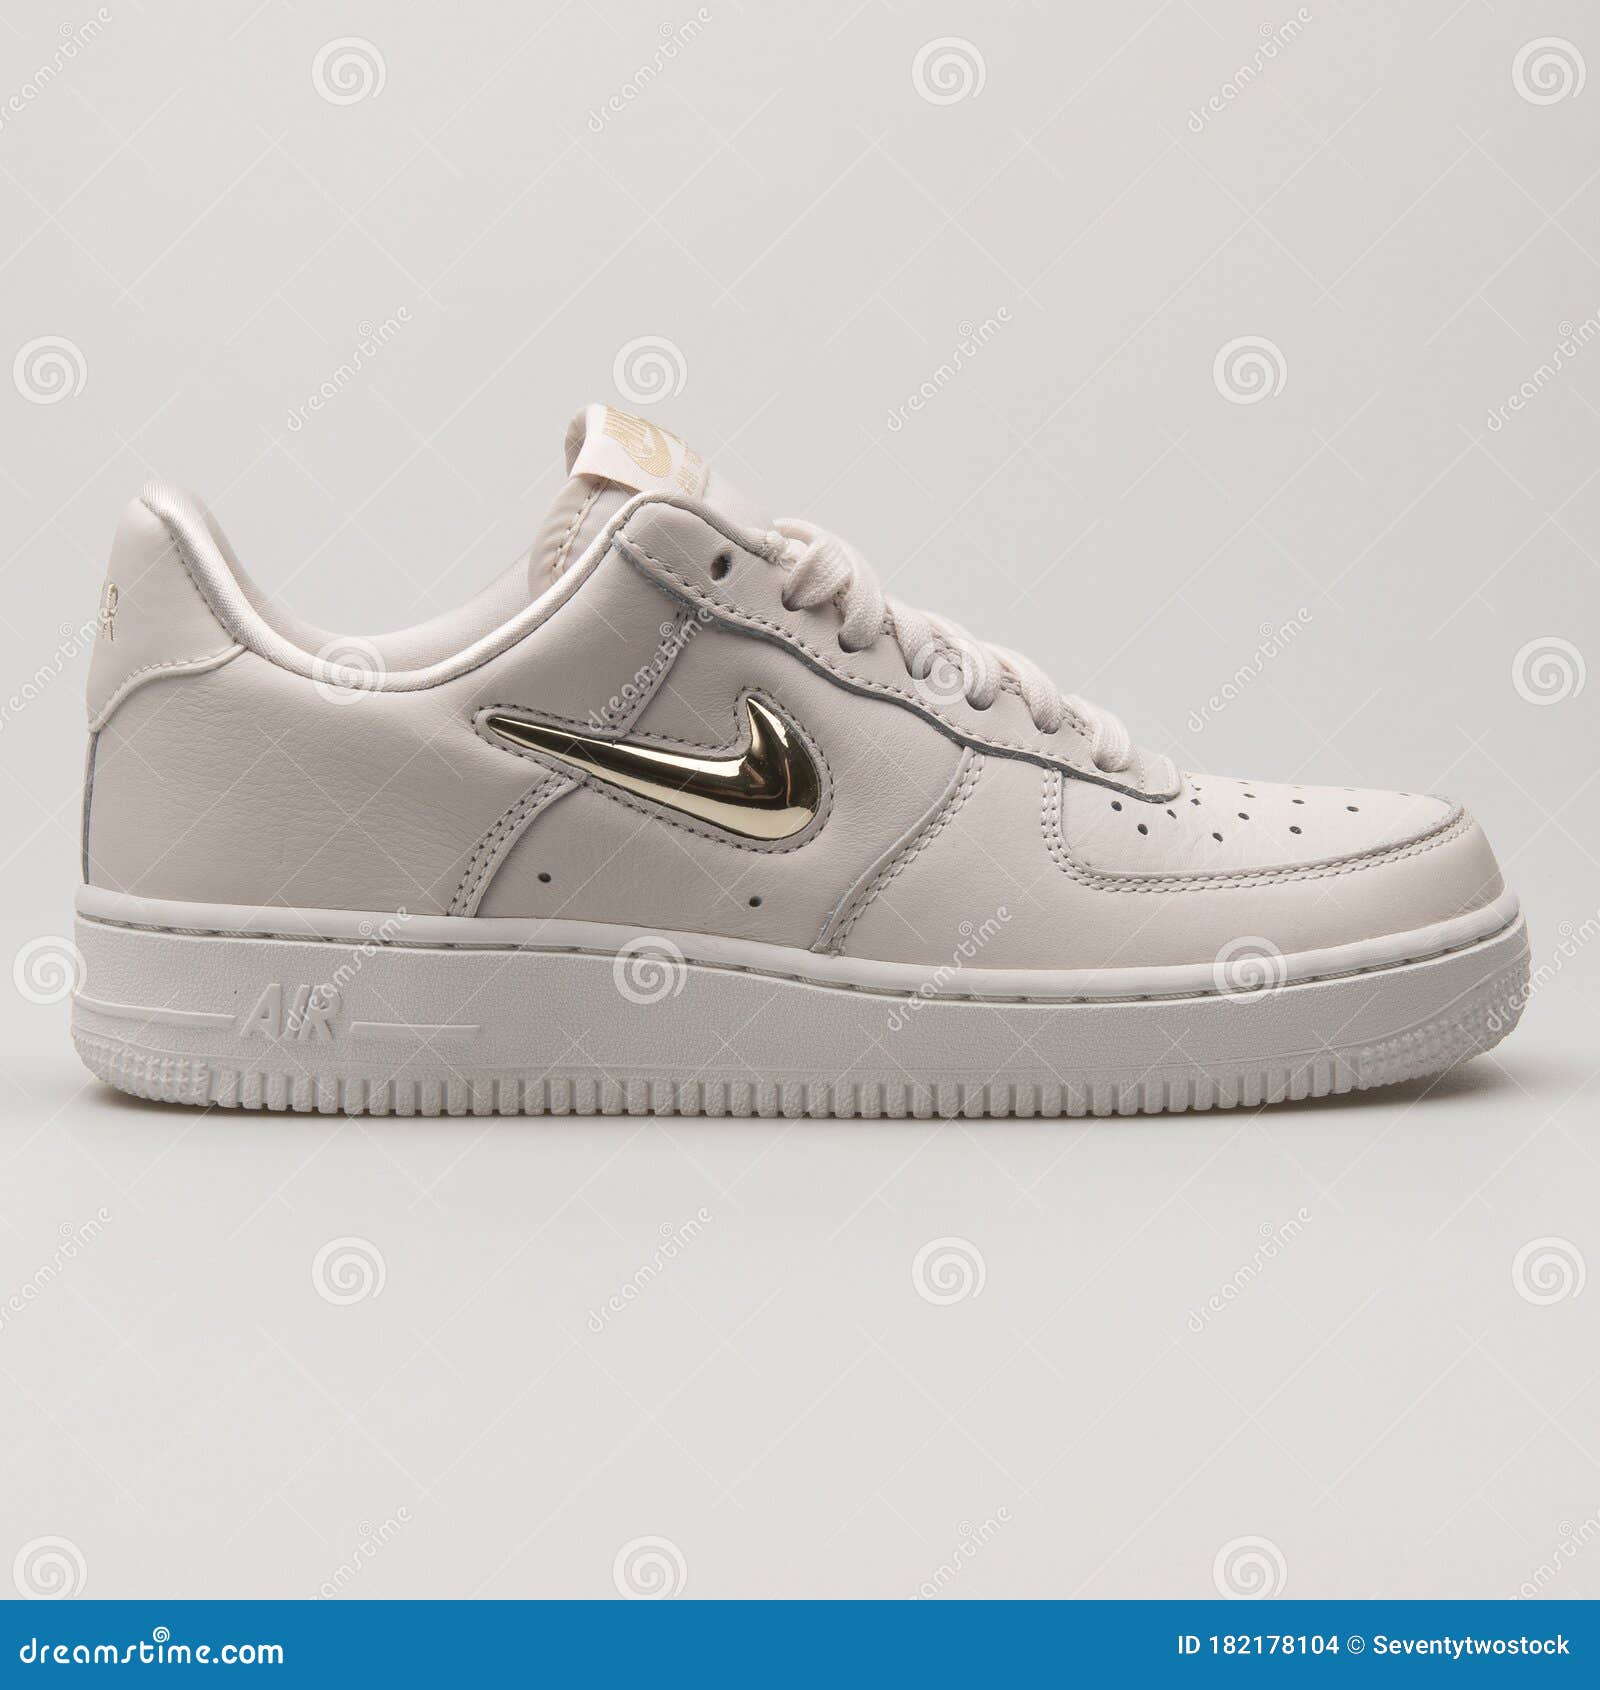 Nike Air Force 1 07 Premium LX Beige and Gold Sneaker Editorial ... وجهك ابيض